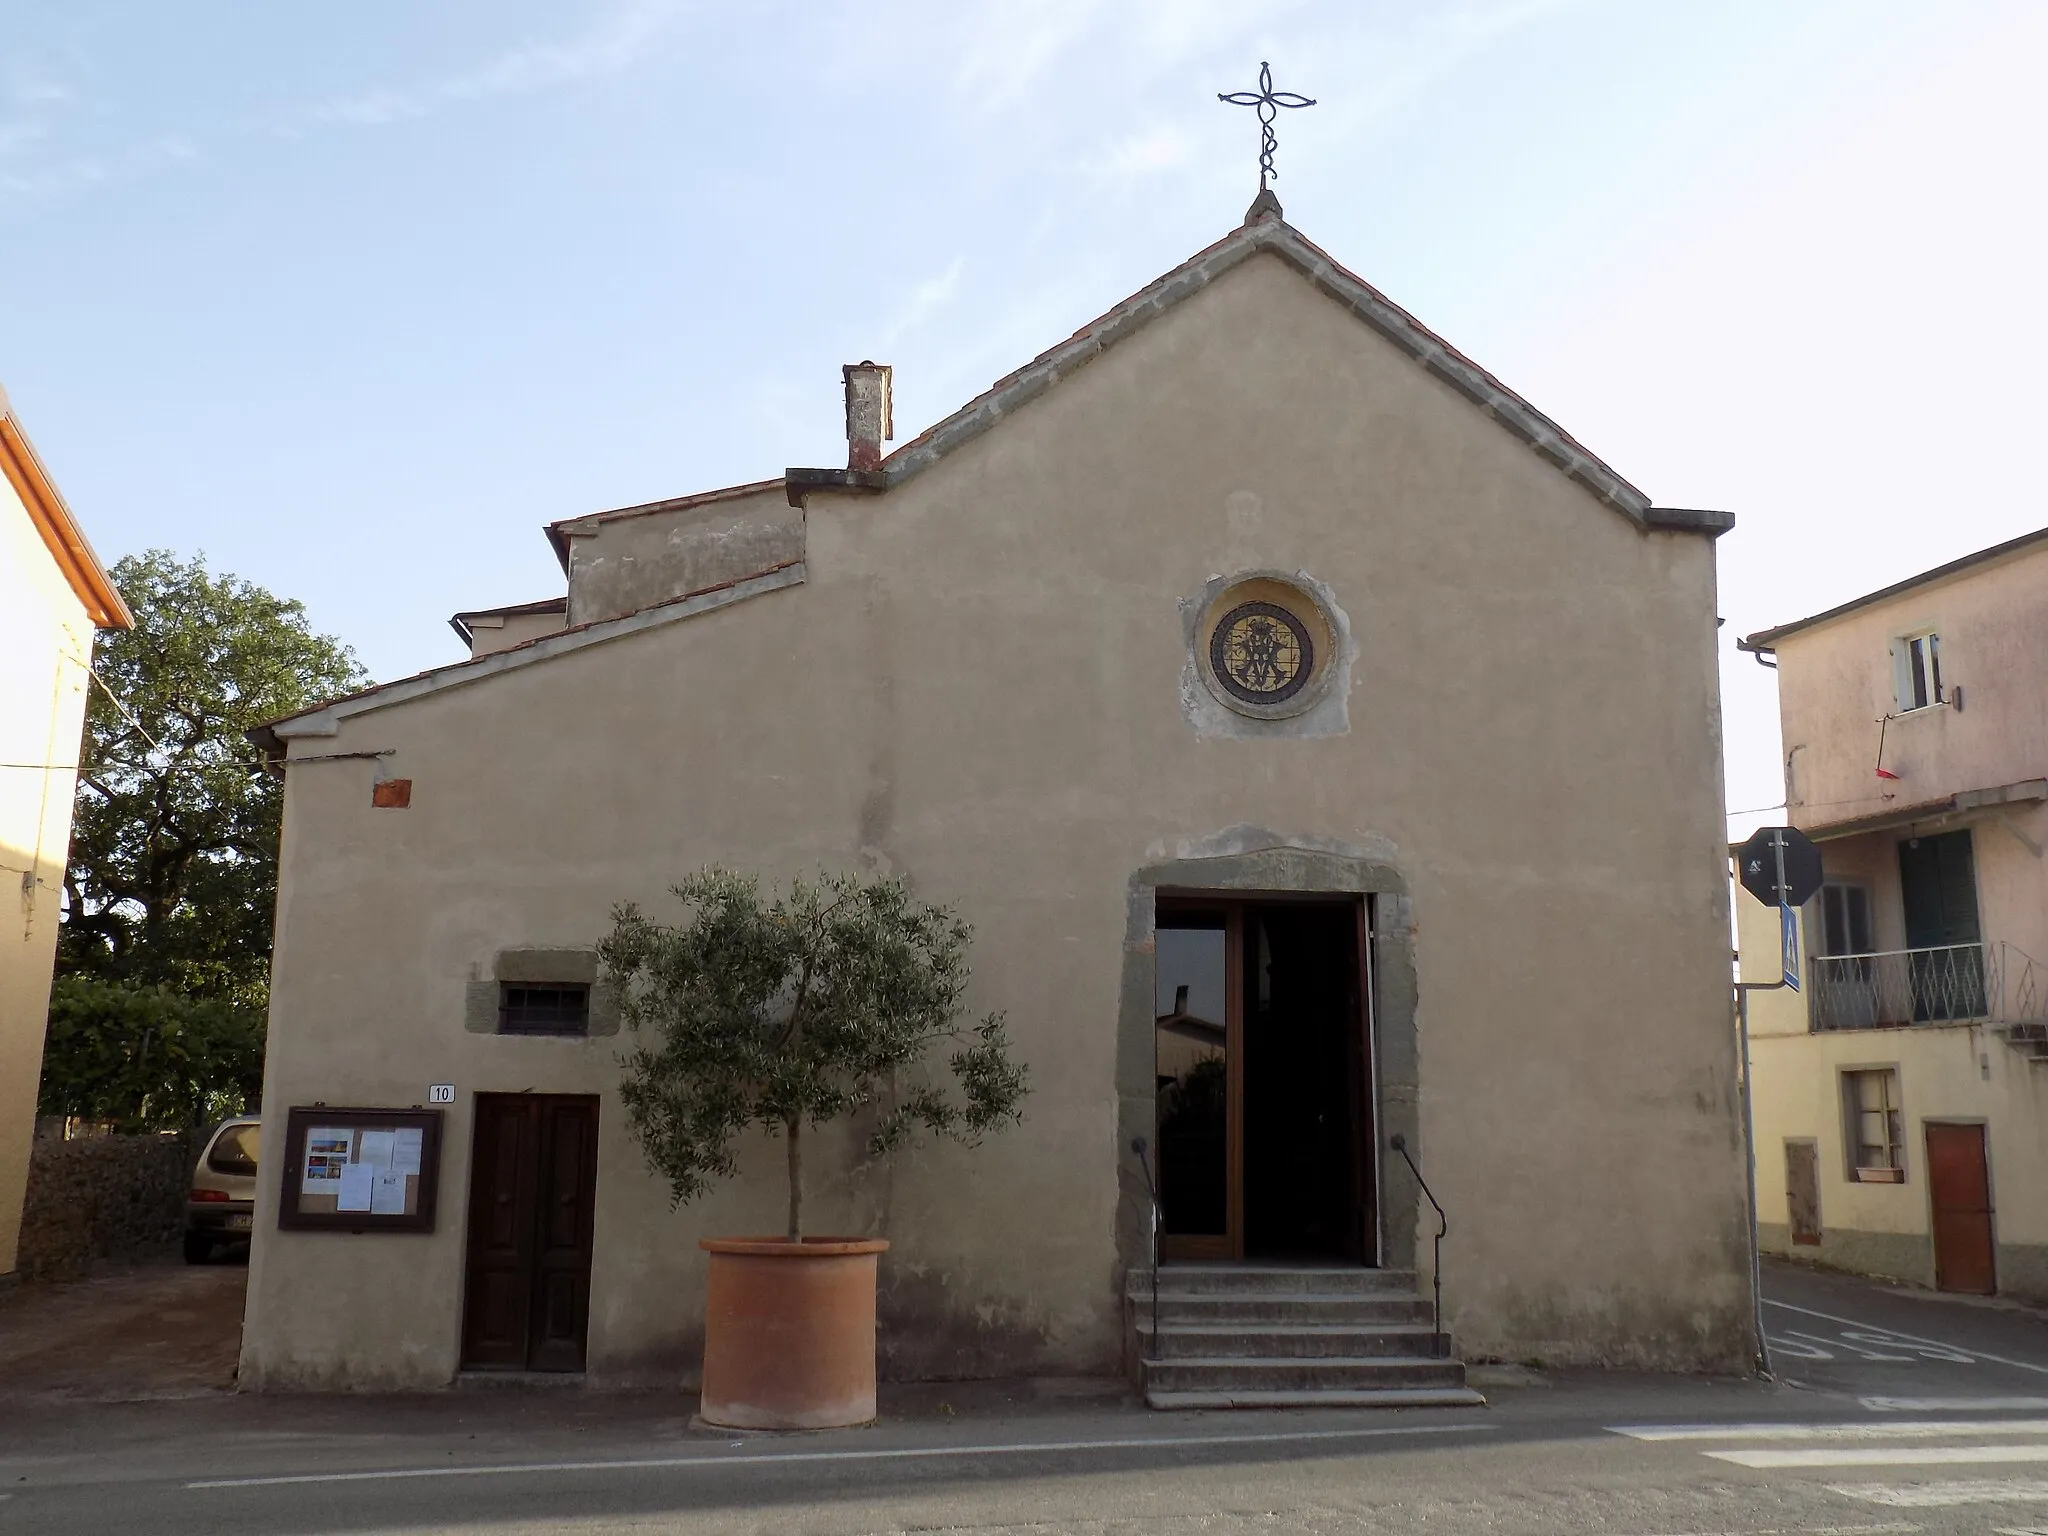 Photo showing: Santissimo Nome di Maria in Pancole, Scansano, Grosseto, Tuscany